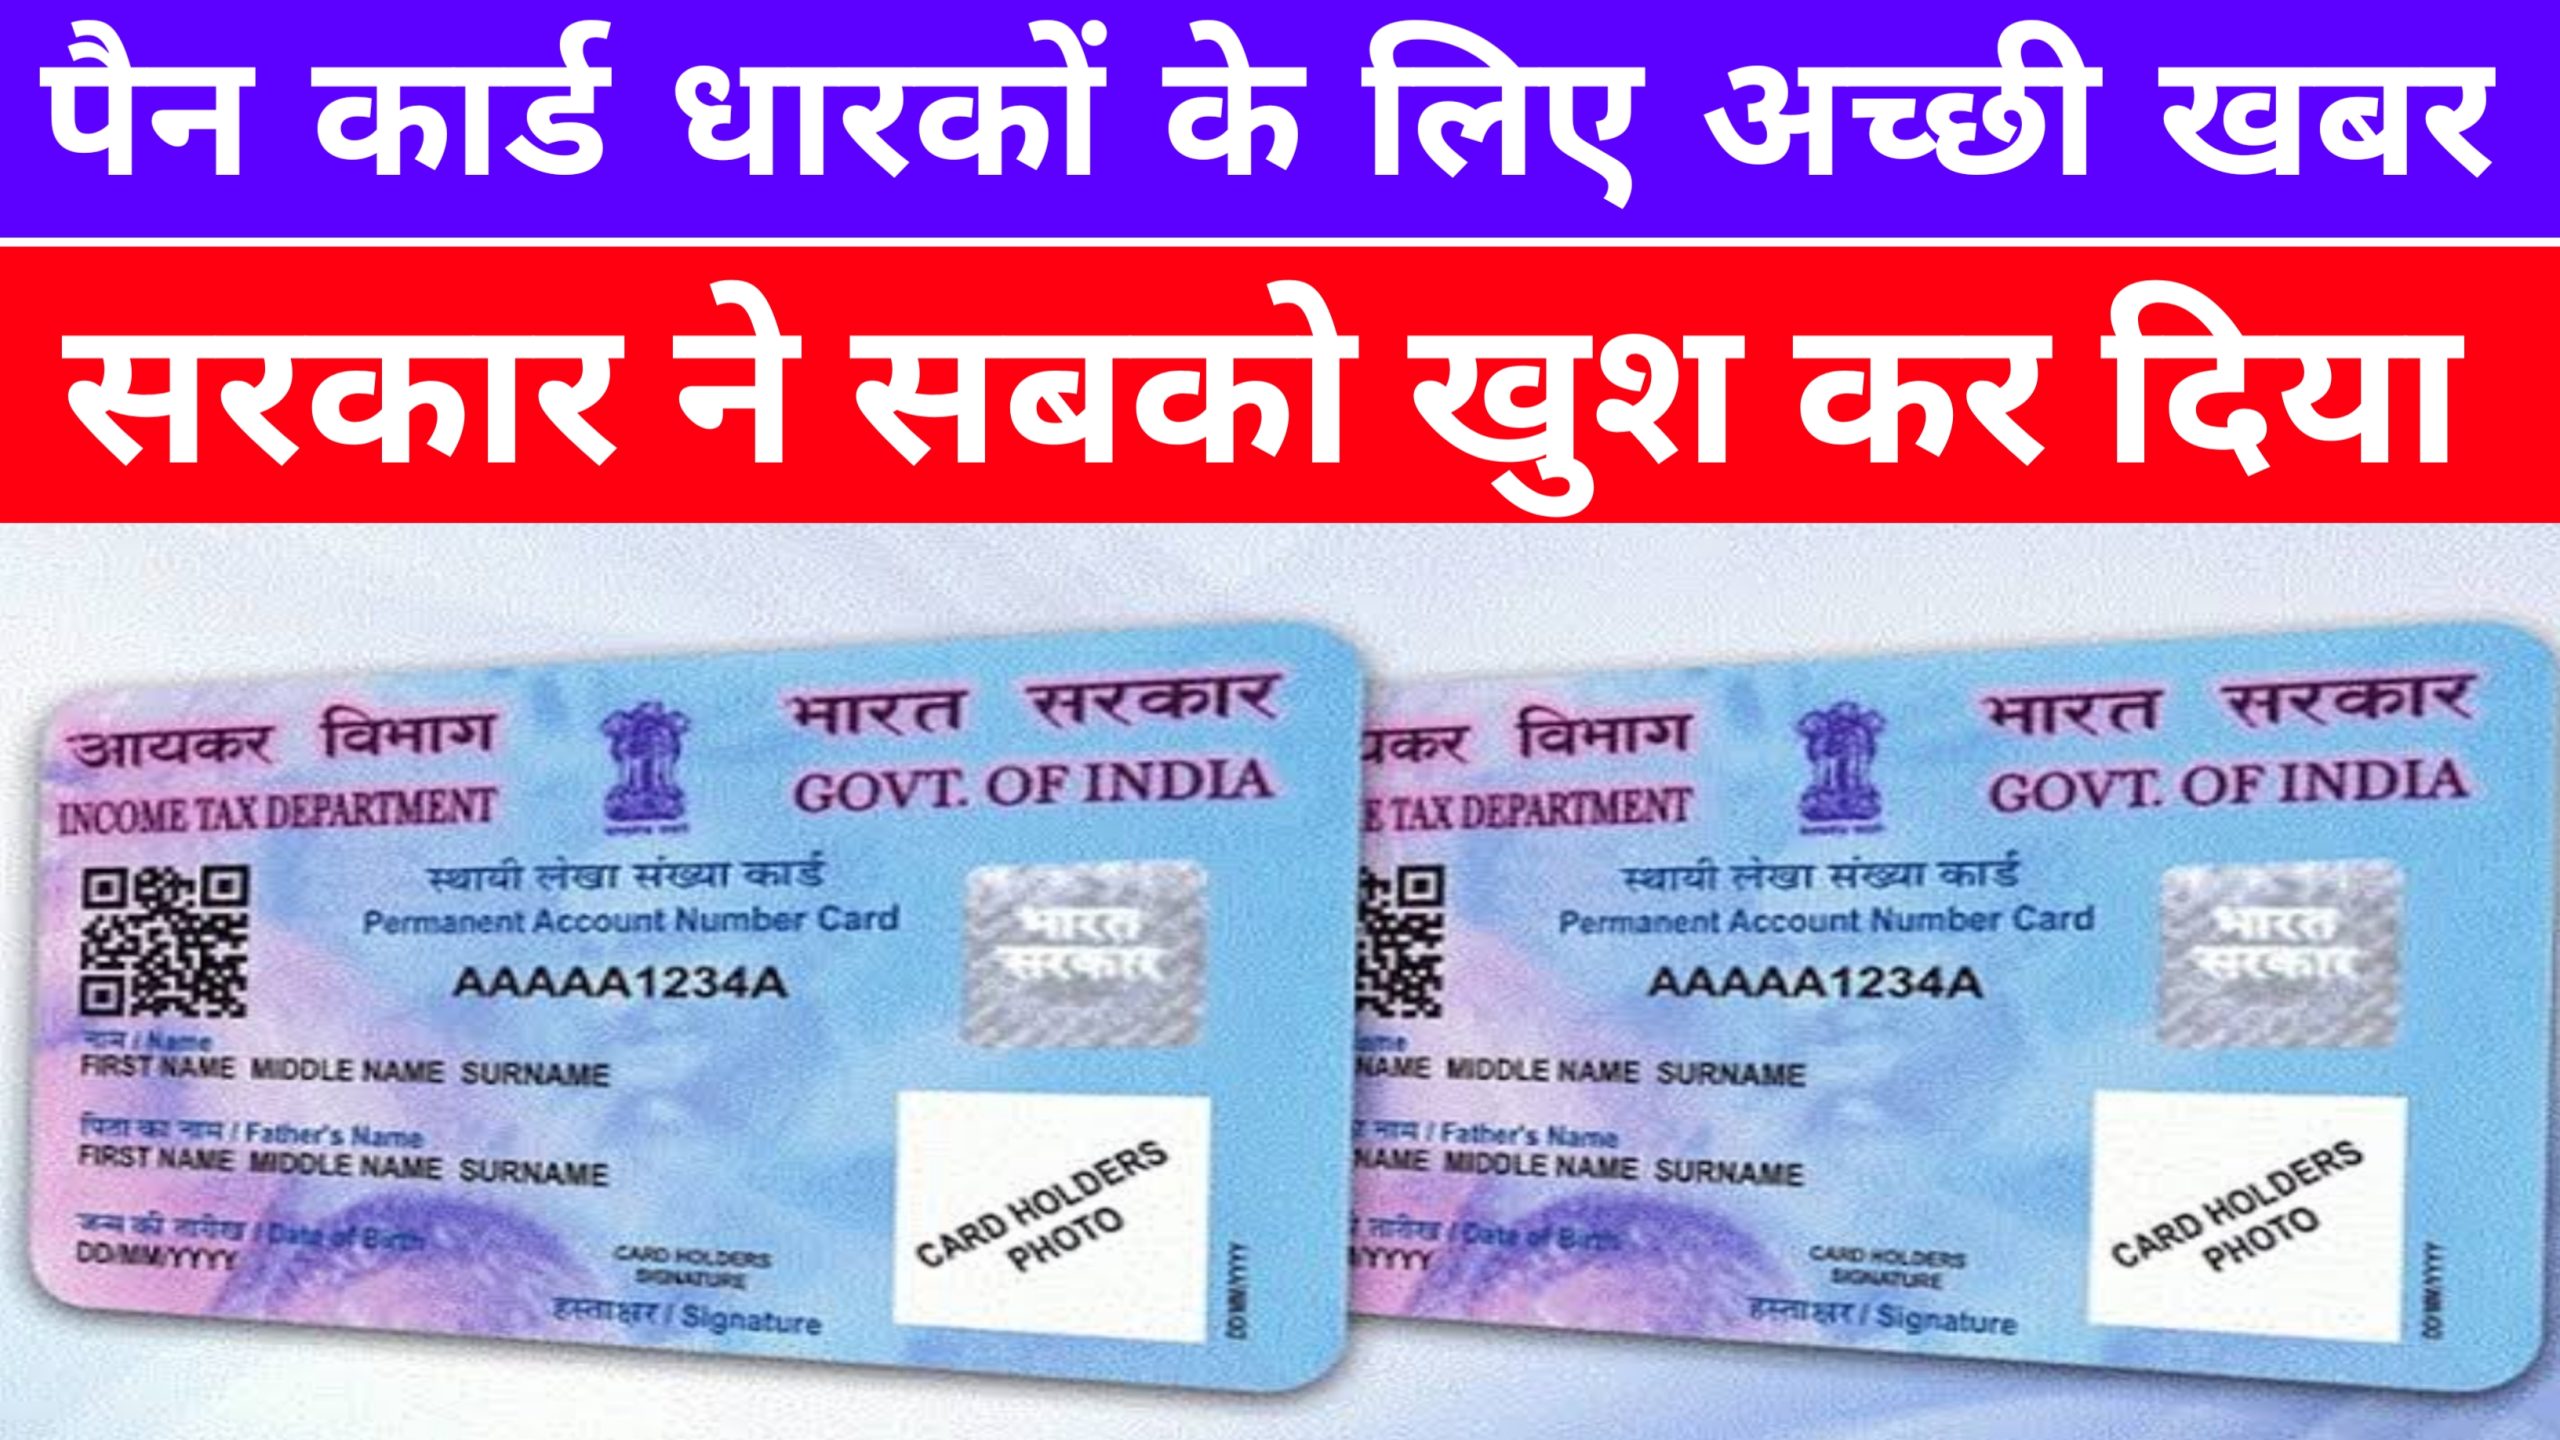 Pan card, pan card news, pan card update, pan card to aadhar card link date, how to link pan card to aadhar card 